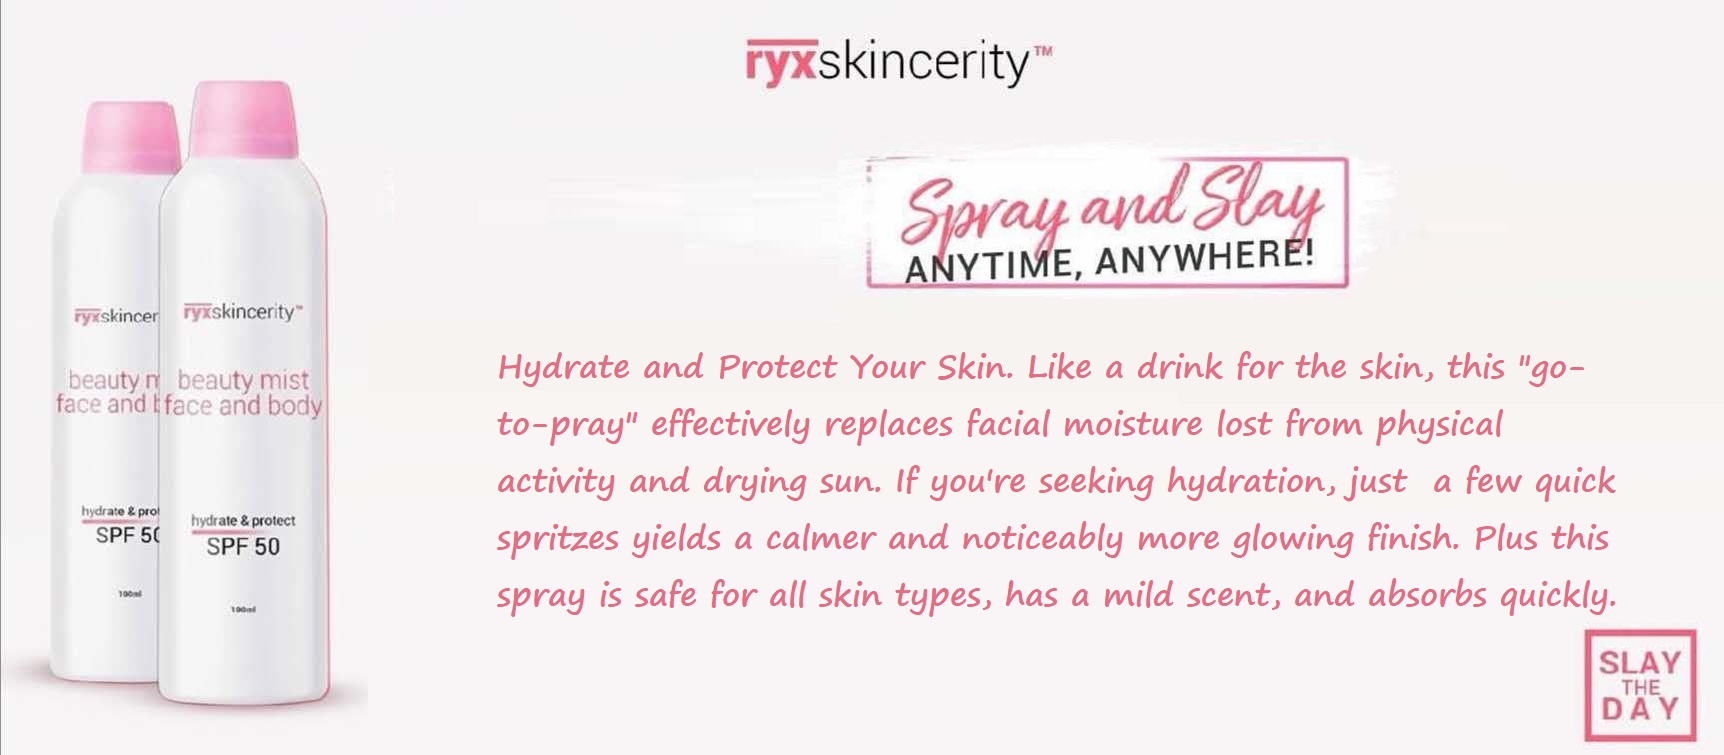 Ryx Skincerity Beauty Mist Features